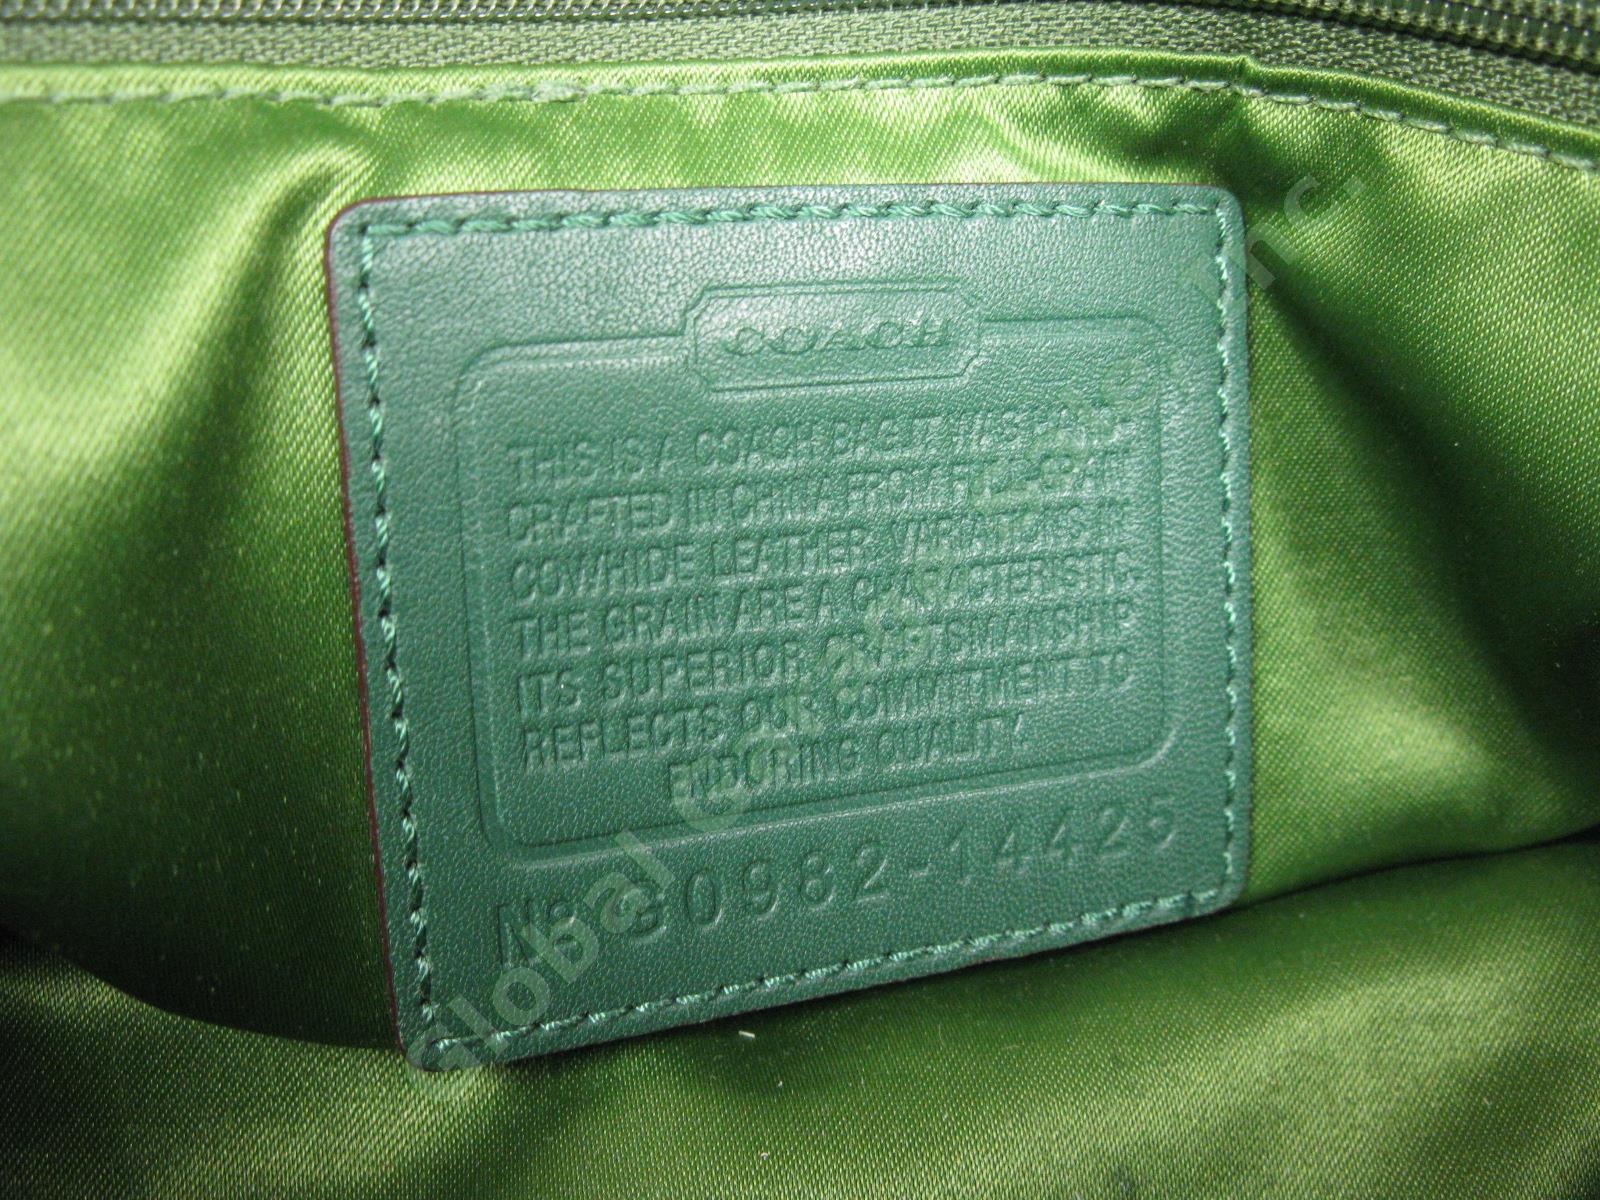 BRAND NEW Coach Designer Dark Green Pebble Leather Handbag Satchel Tote Bag NR 7